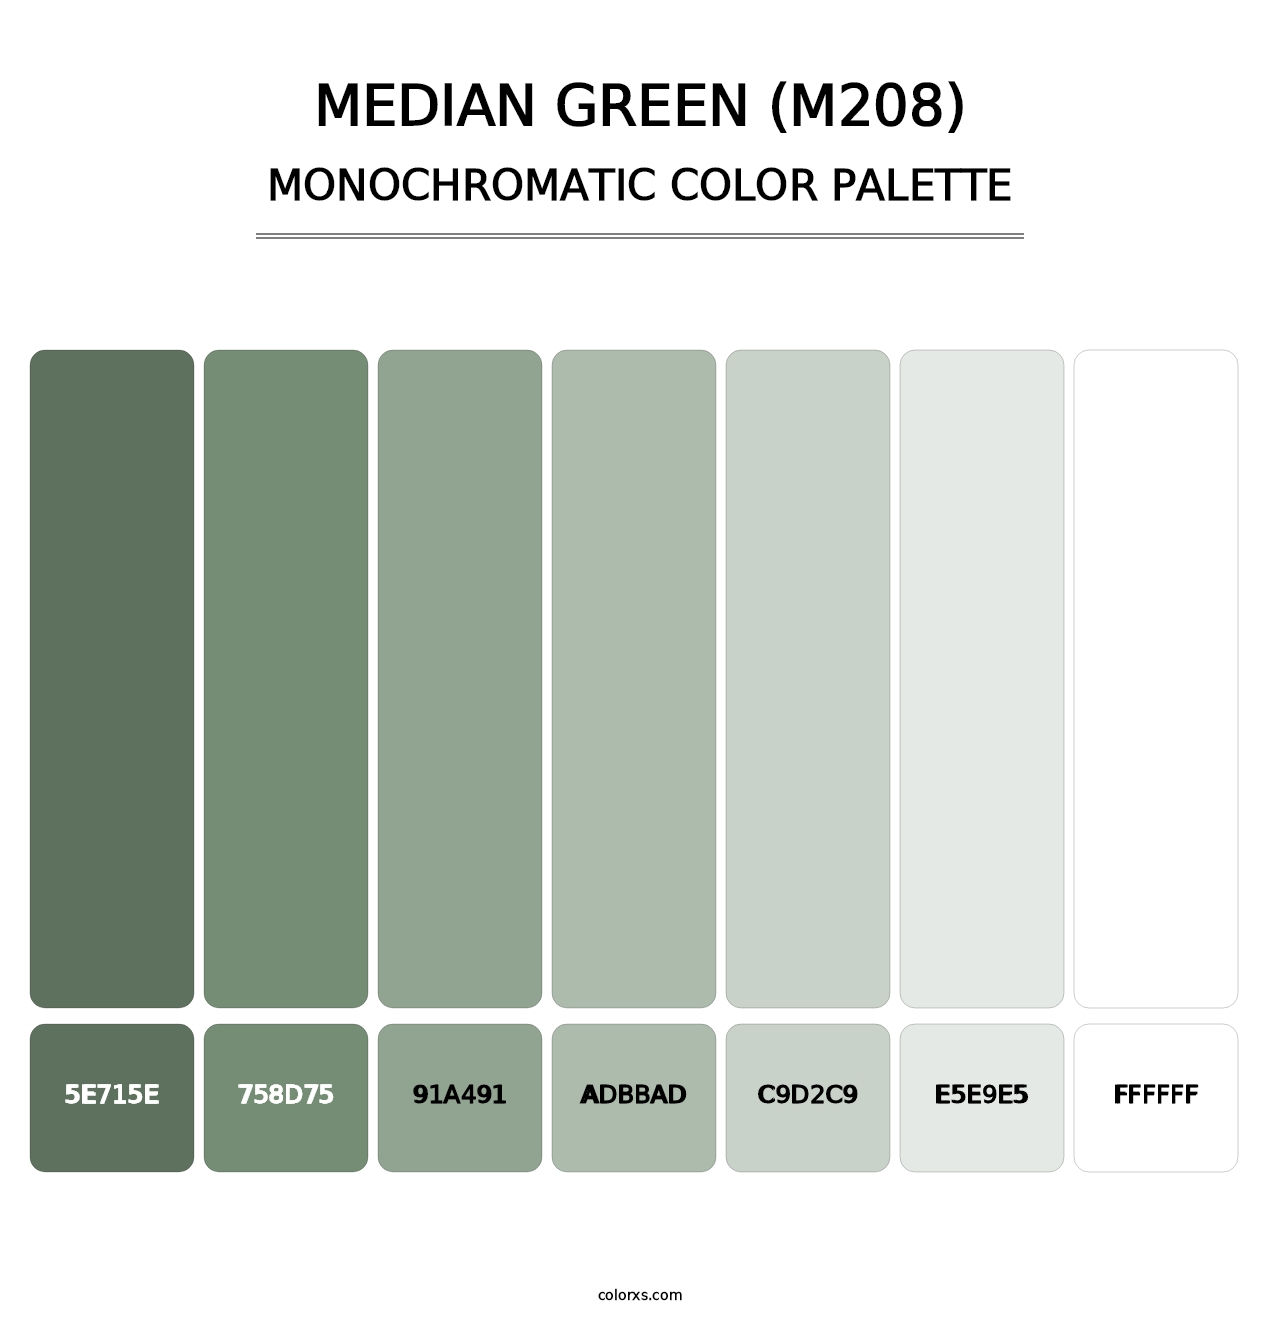 Median Green (M208) - Monochromatic Color Palette